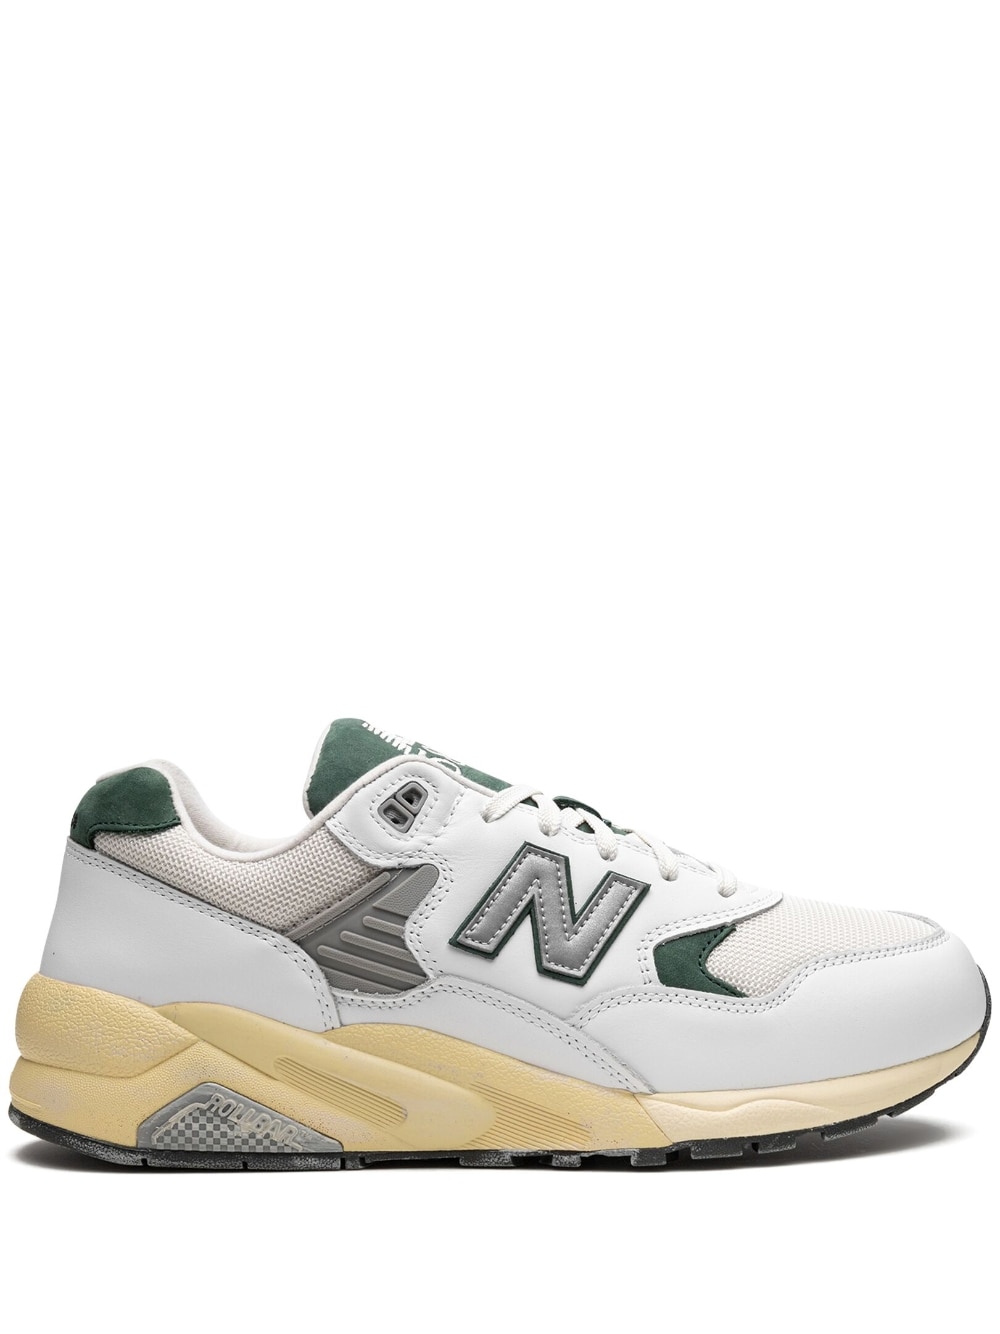 New Balance 580 "Nightwatch Green" sneakers - White